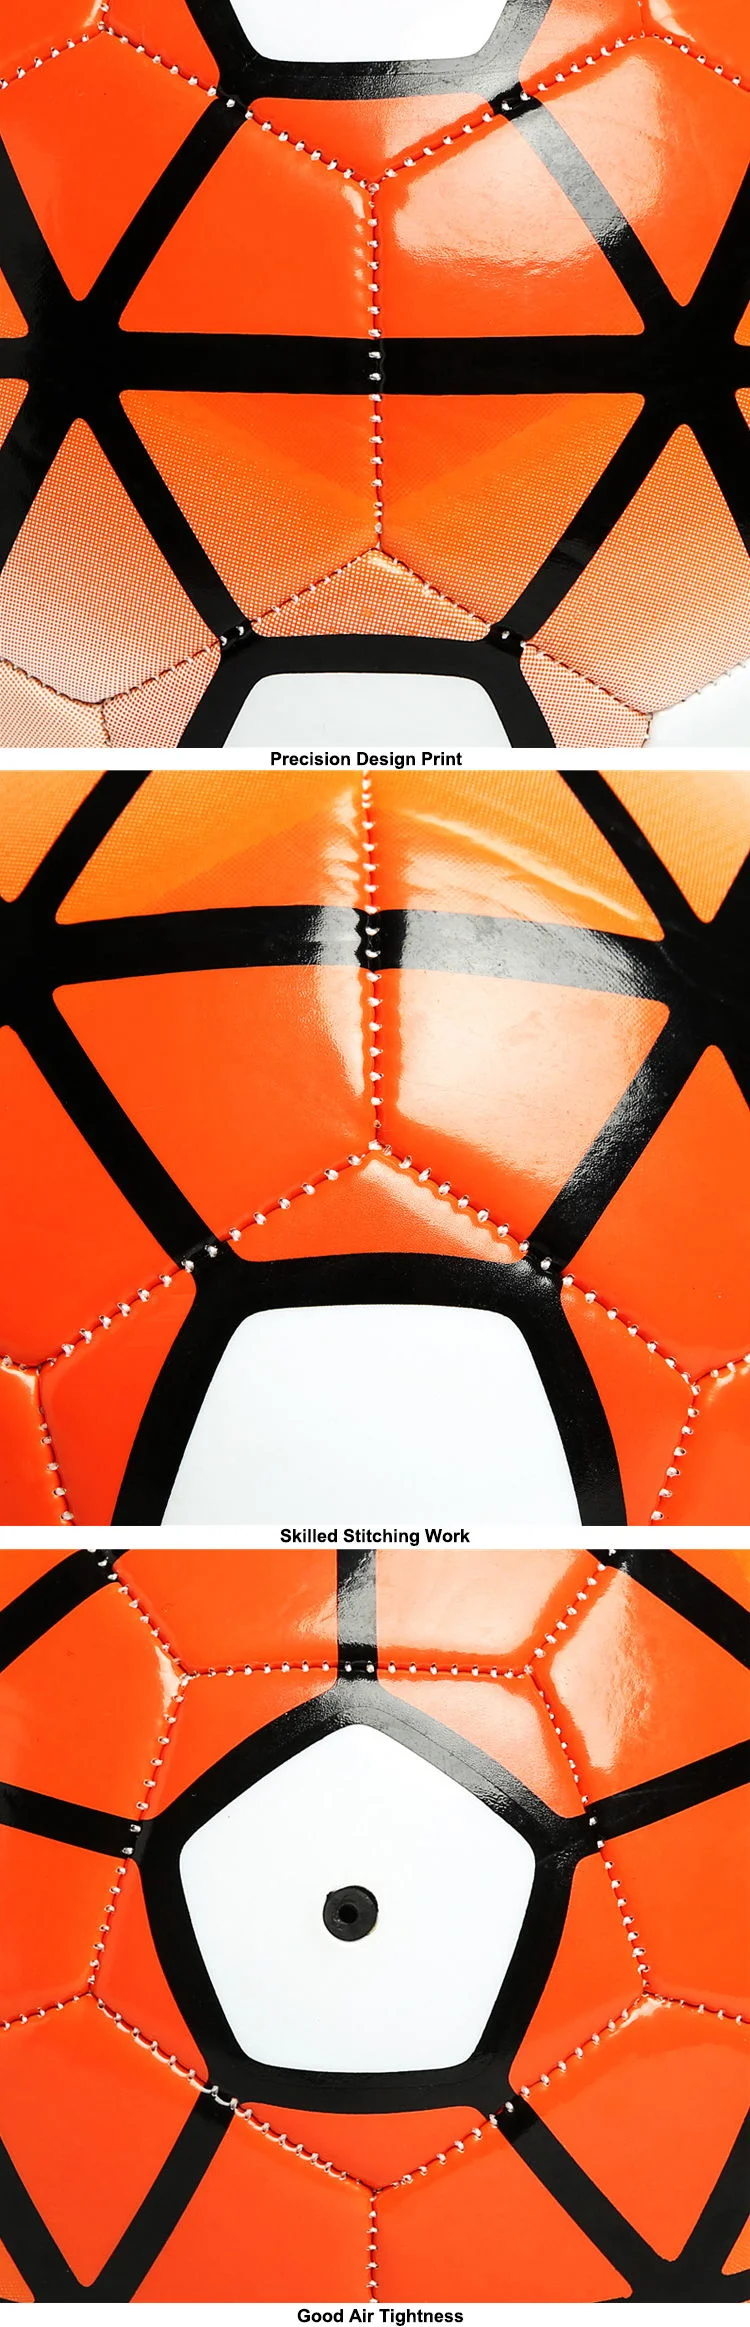 Regulation Machine Stitched Training Soccer Ball